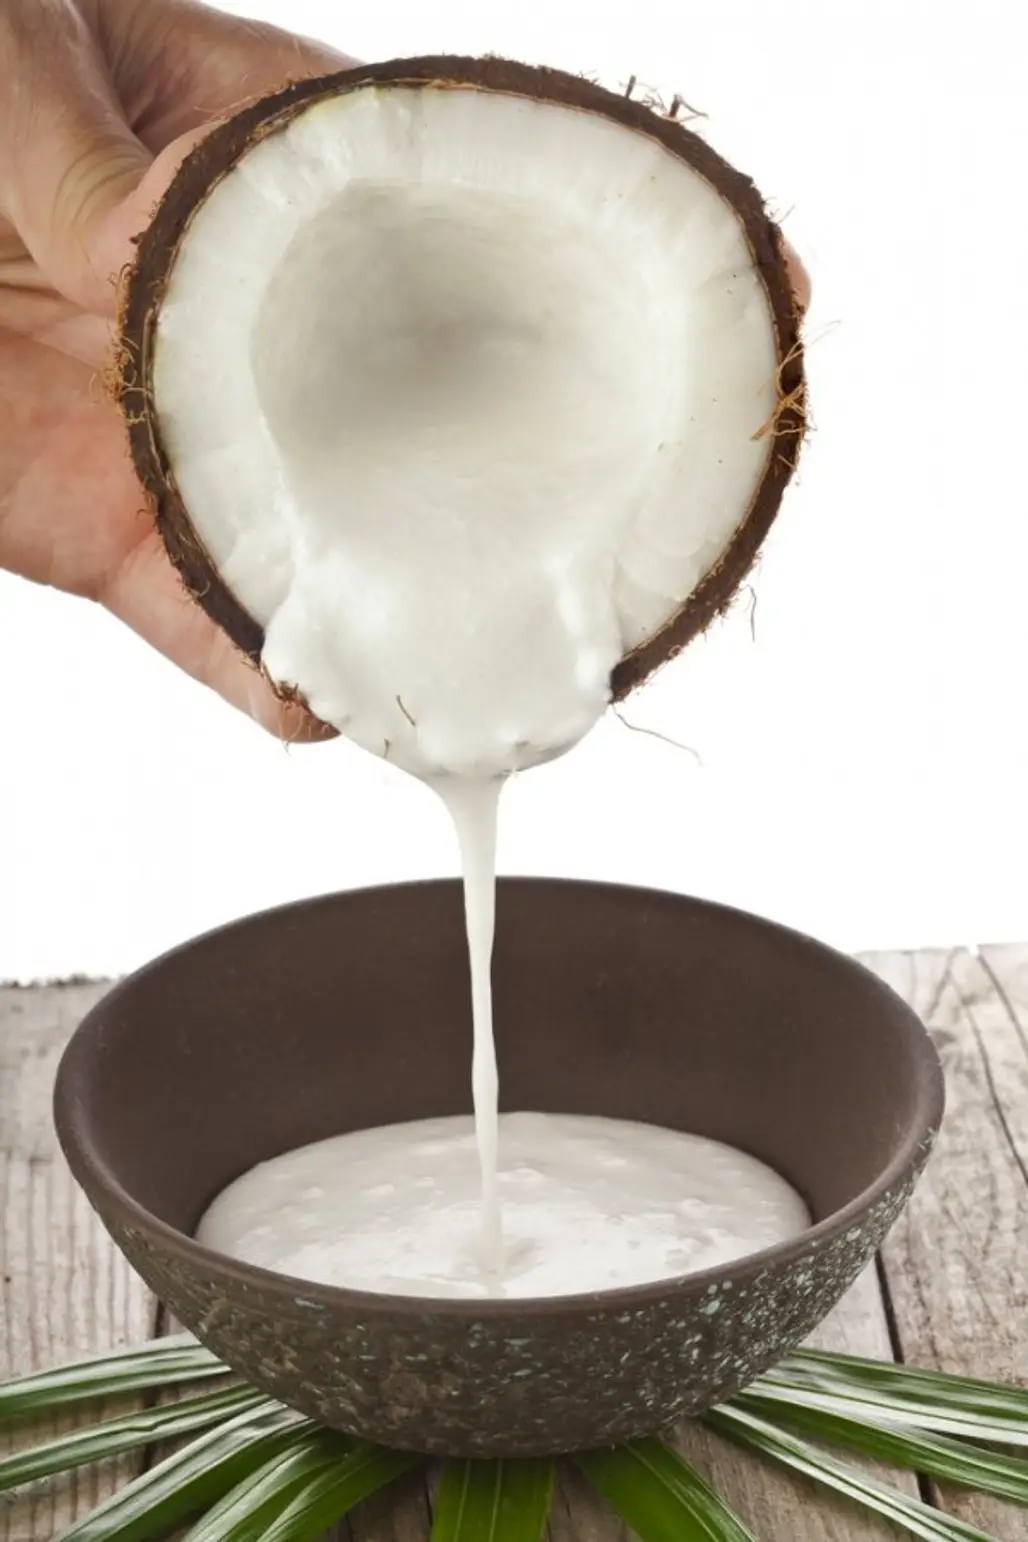 Full-Fat Coconut Milk